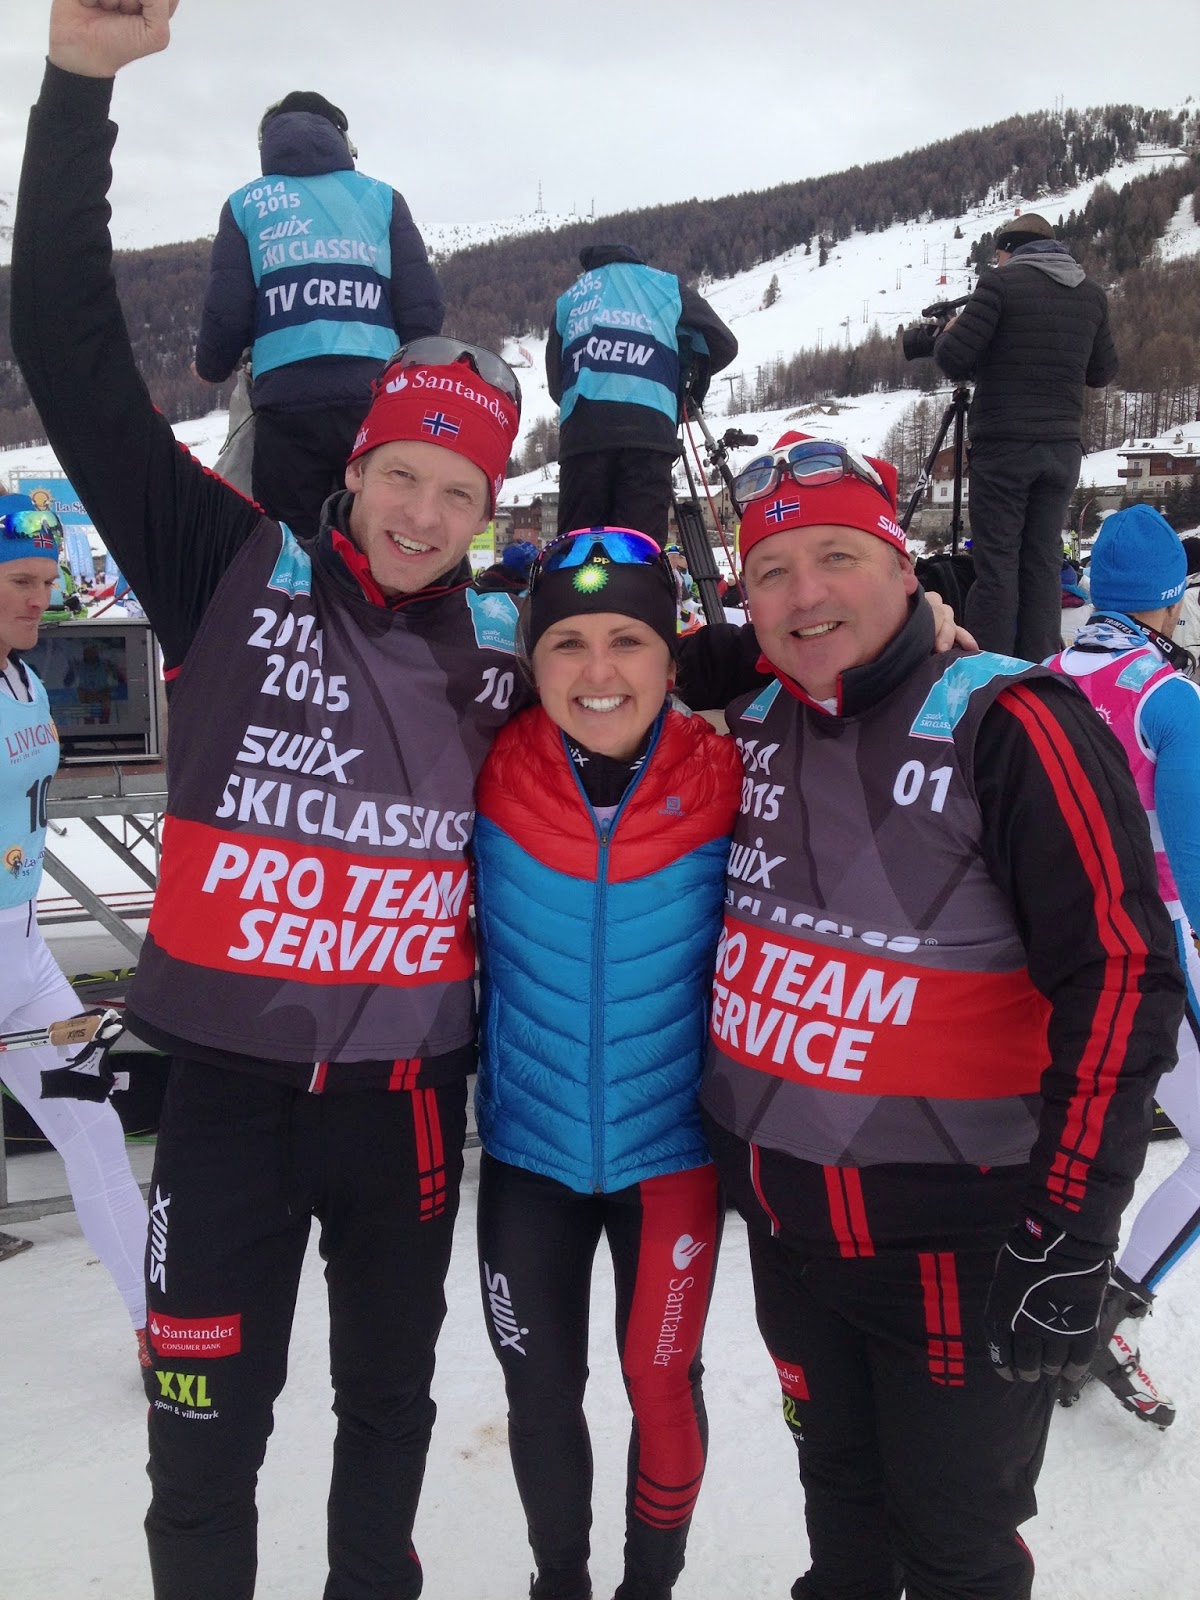 Brooks Joins Norwegian Pro Team, Adds Swix Ski Classics to Season Schedule